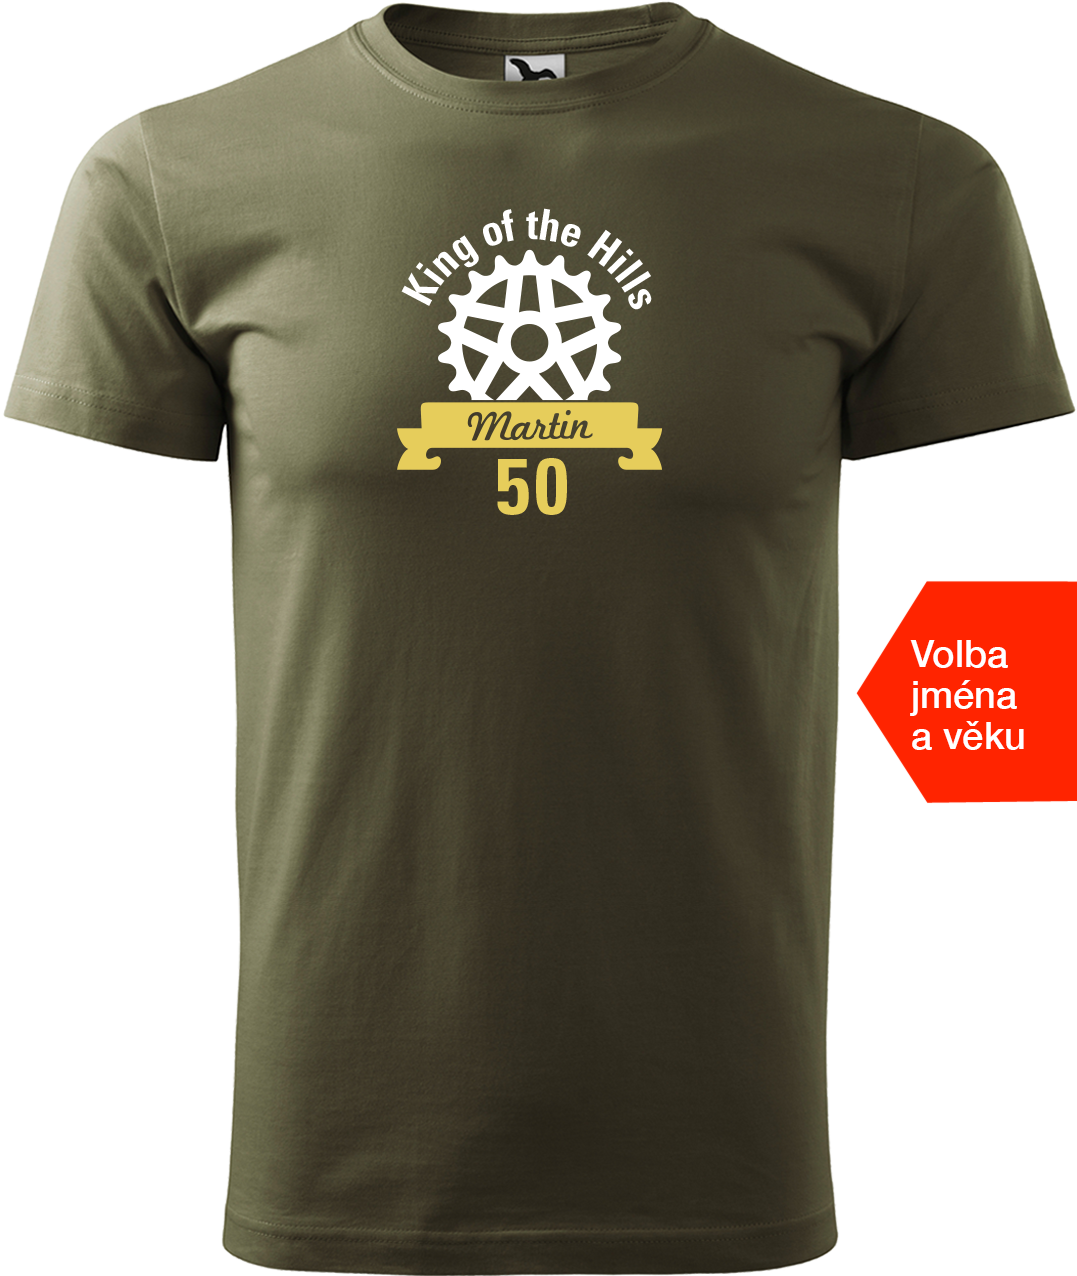 Pánské tričko pro cyklistu se jménem - King of the Hills Velikost: S, Barva: Military (69)